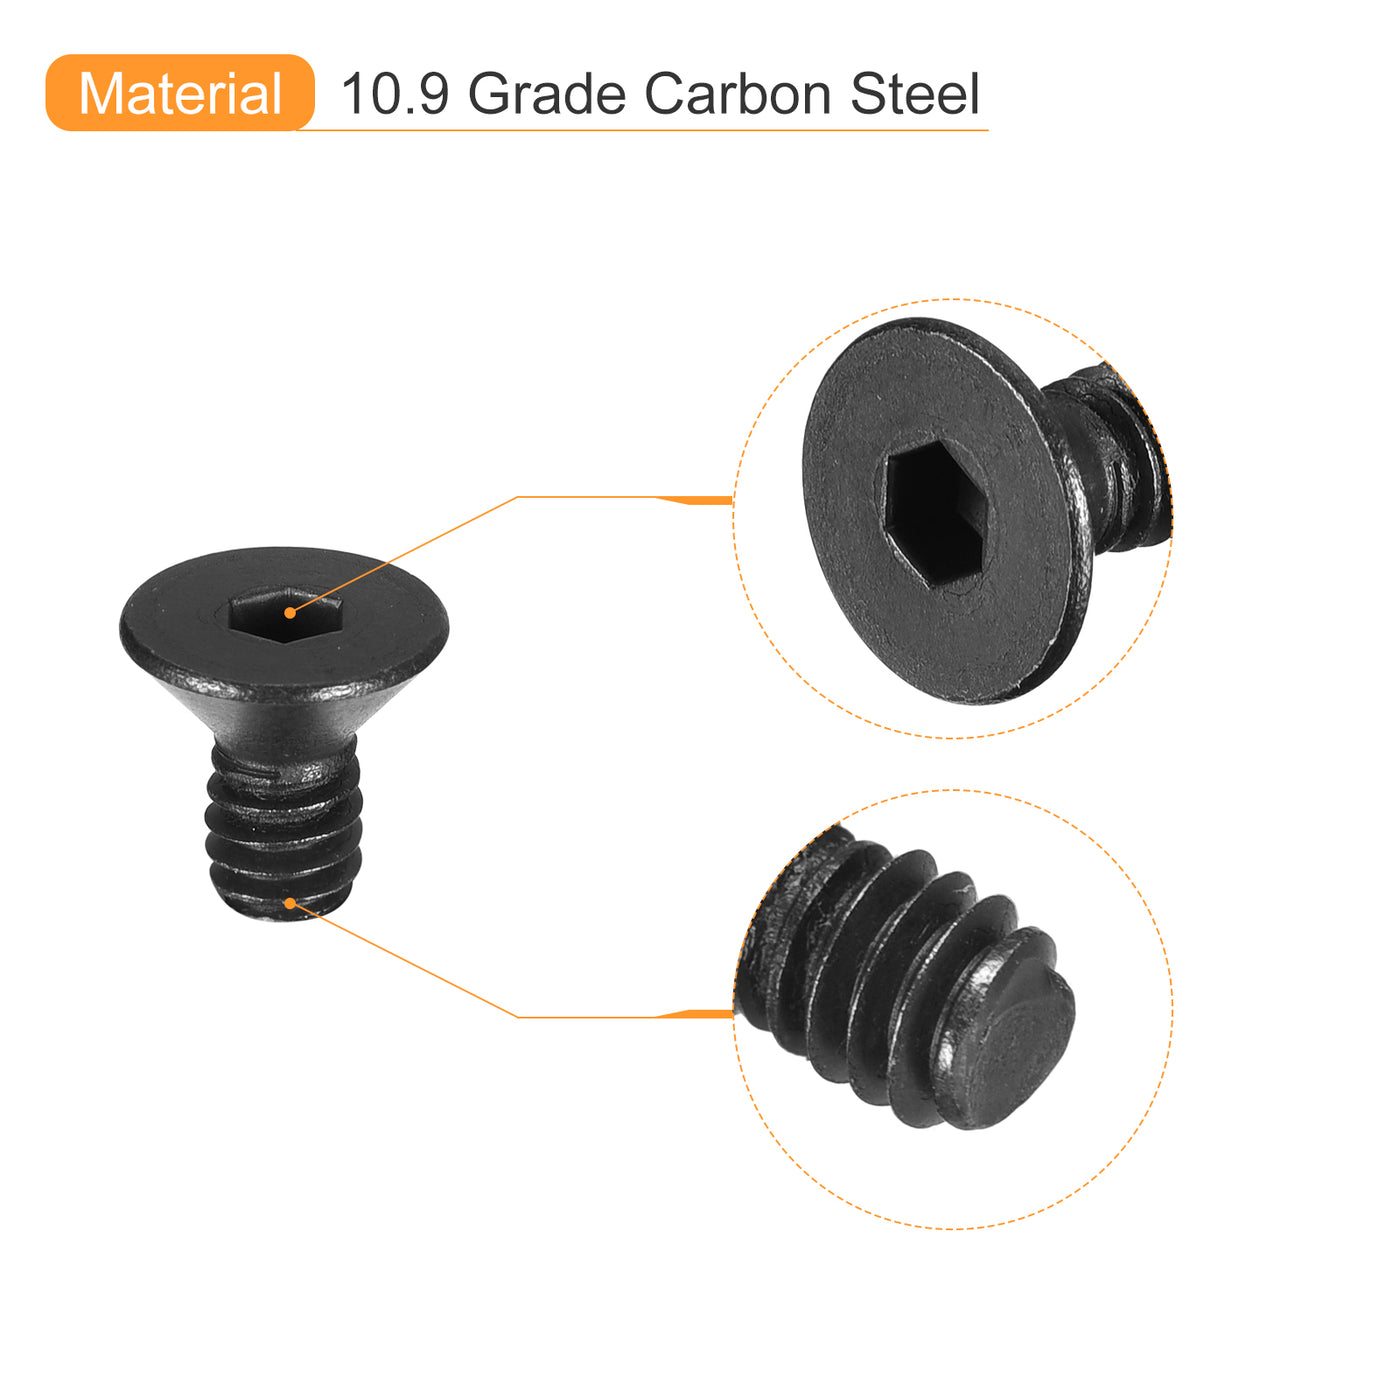 uxcell Uxcell 1/4-20x1/2" Flat Head Socket Cap Screws, 10.9 Grade Carbon Steel, 50PCS